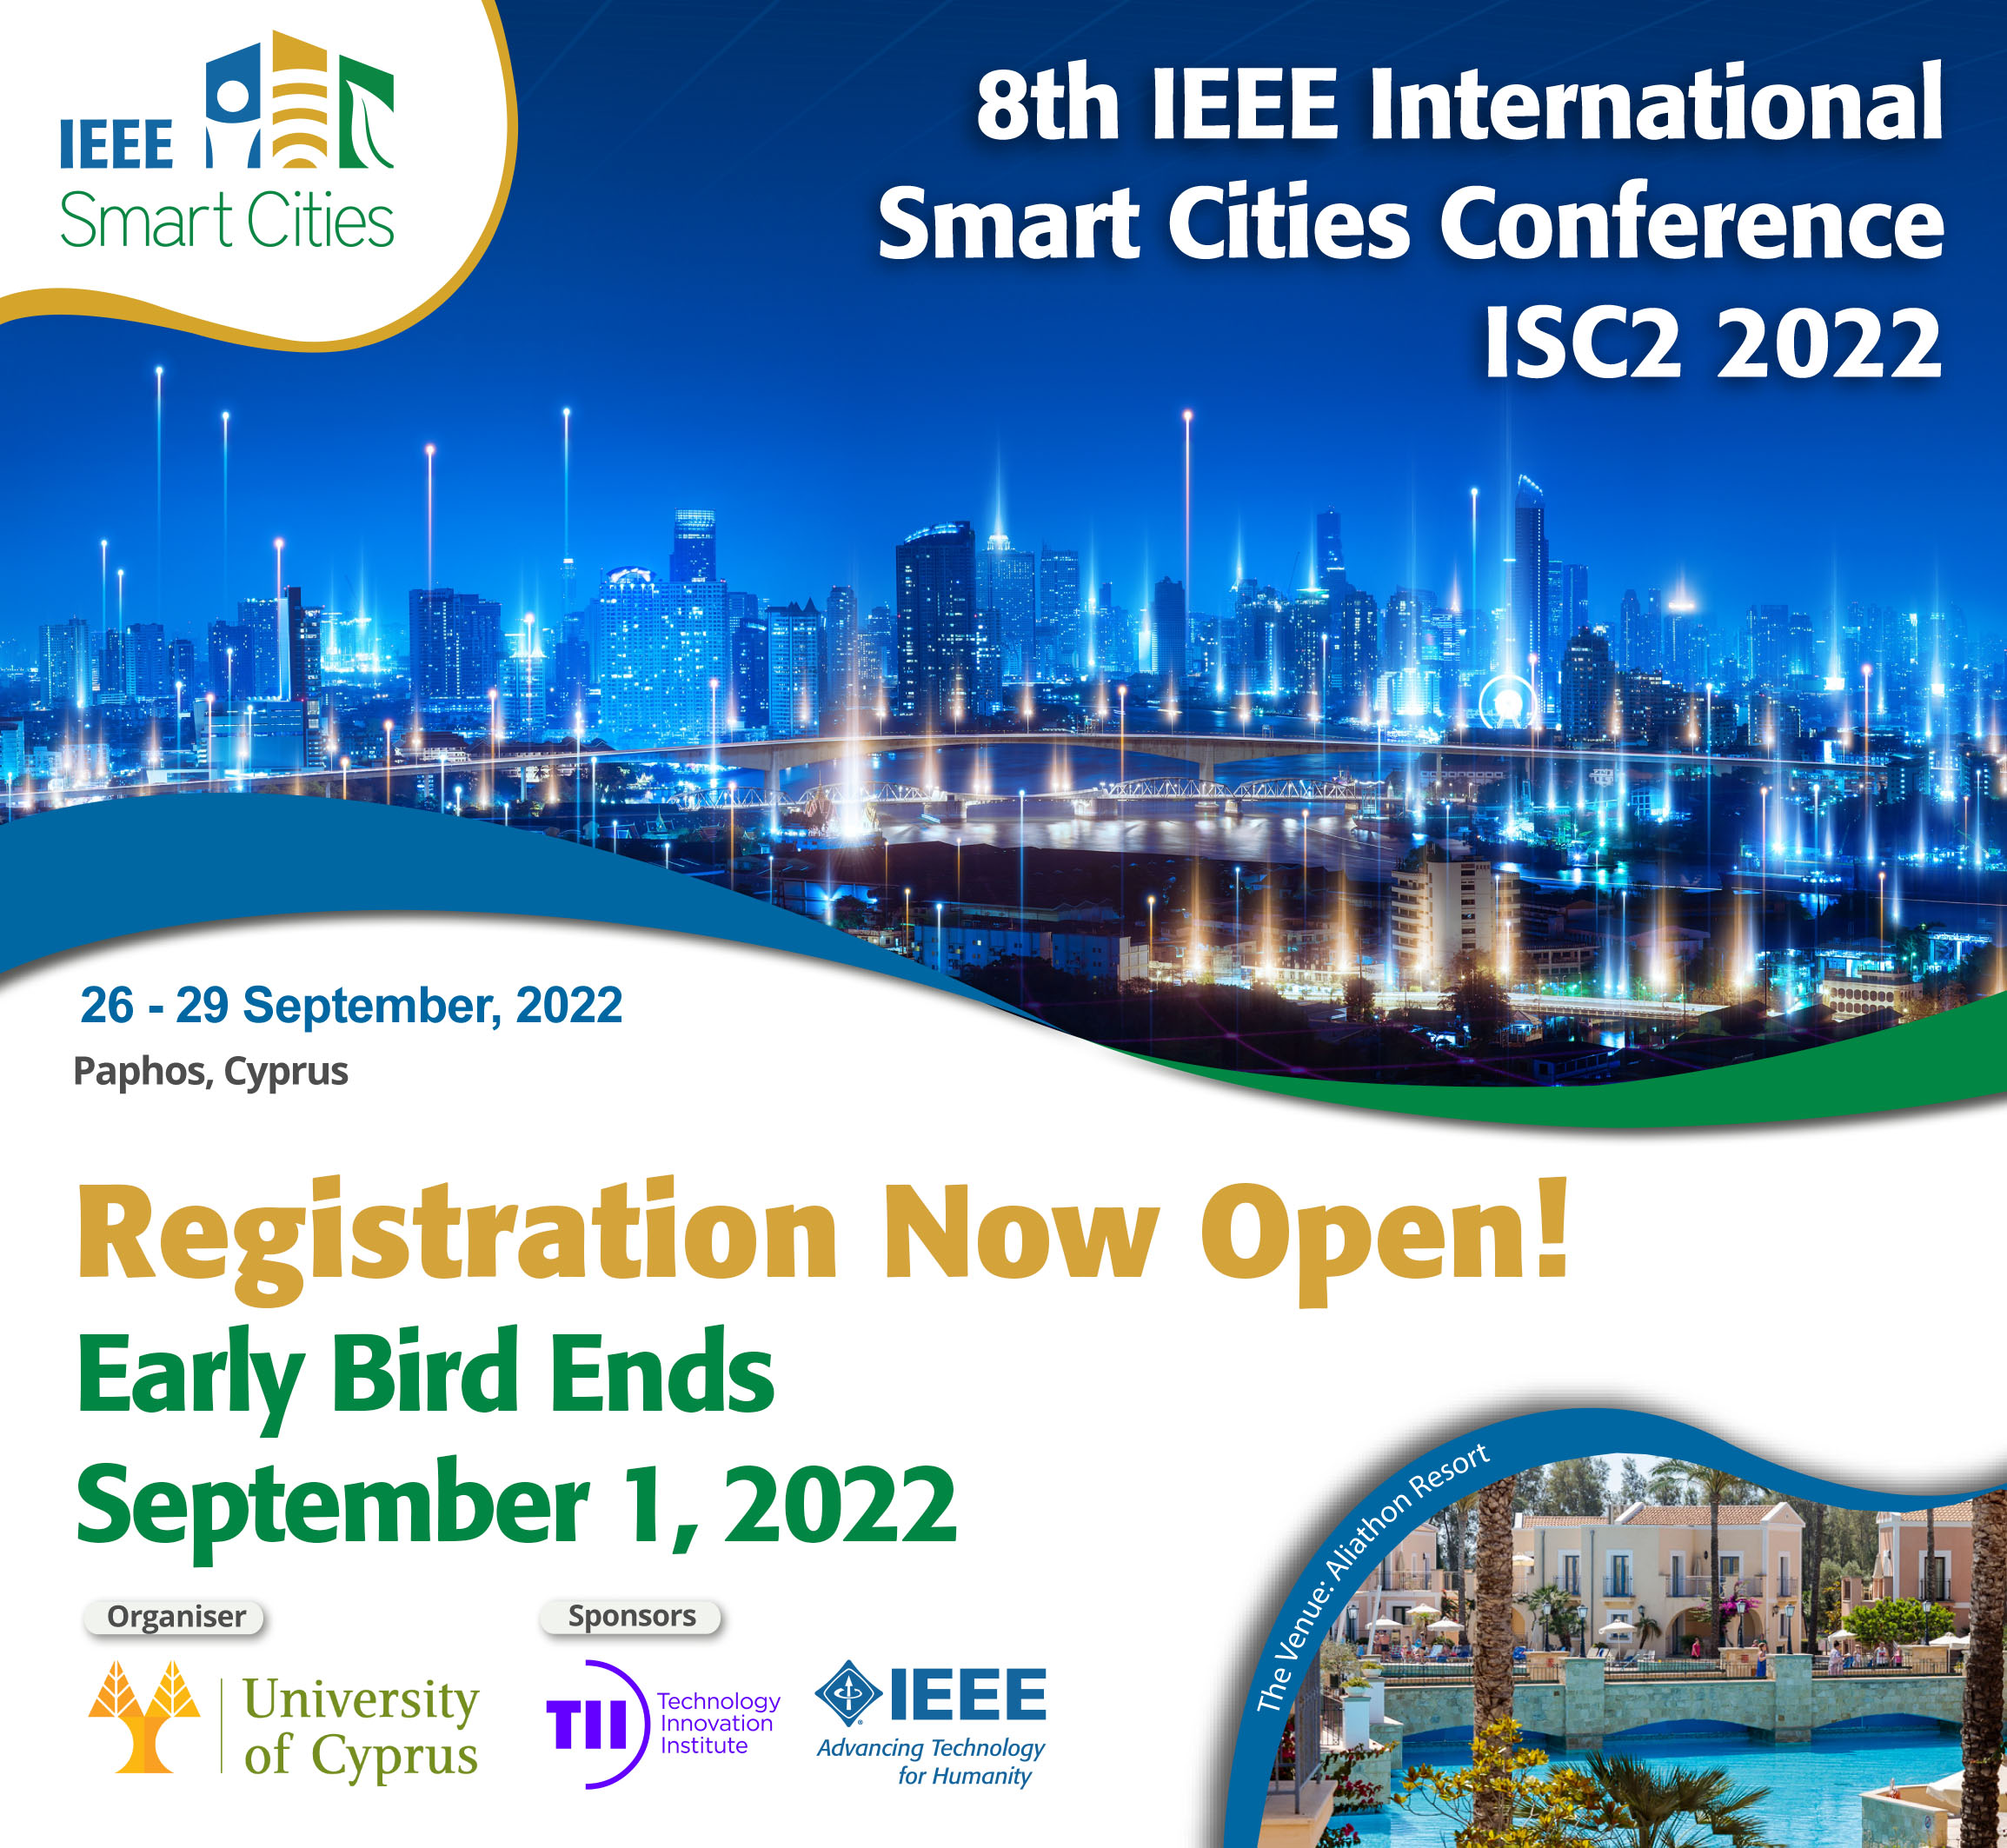 IEEE ISC2 2022 Registration is open, Early Bird Registration ends September 1, 2022